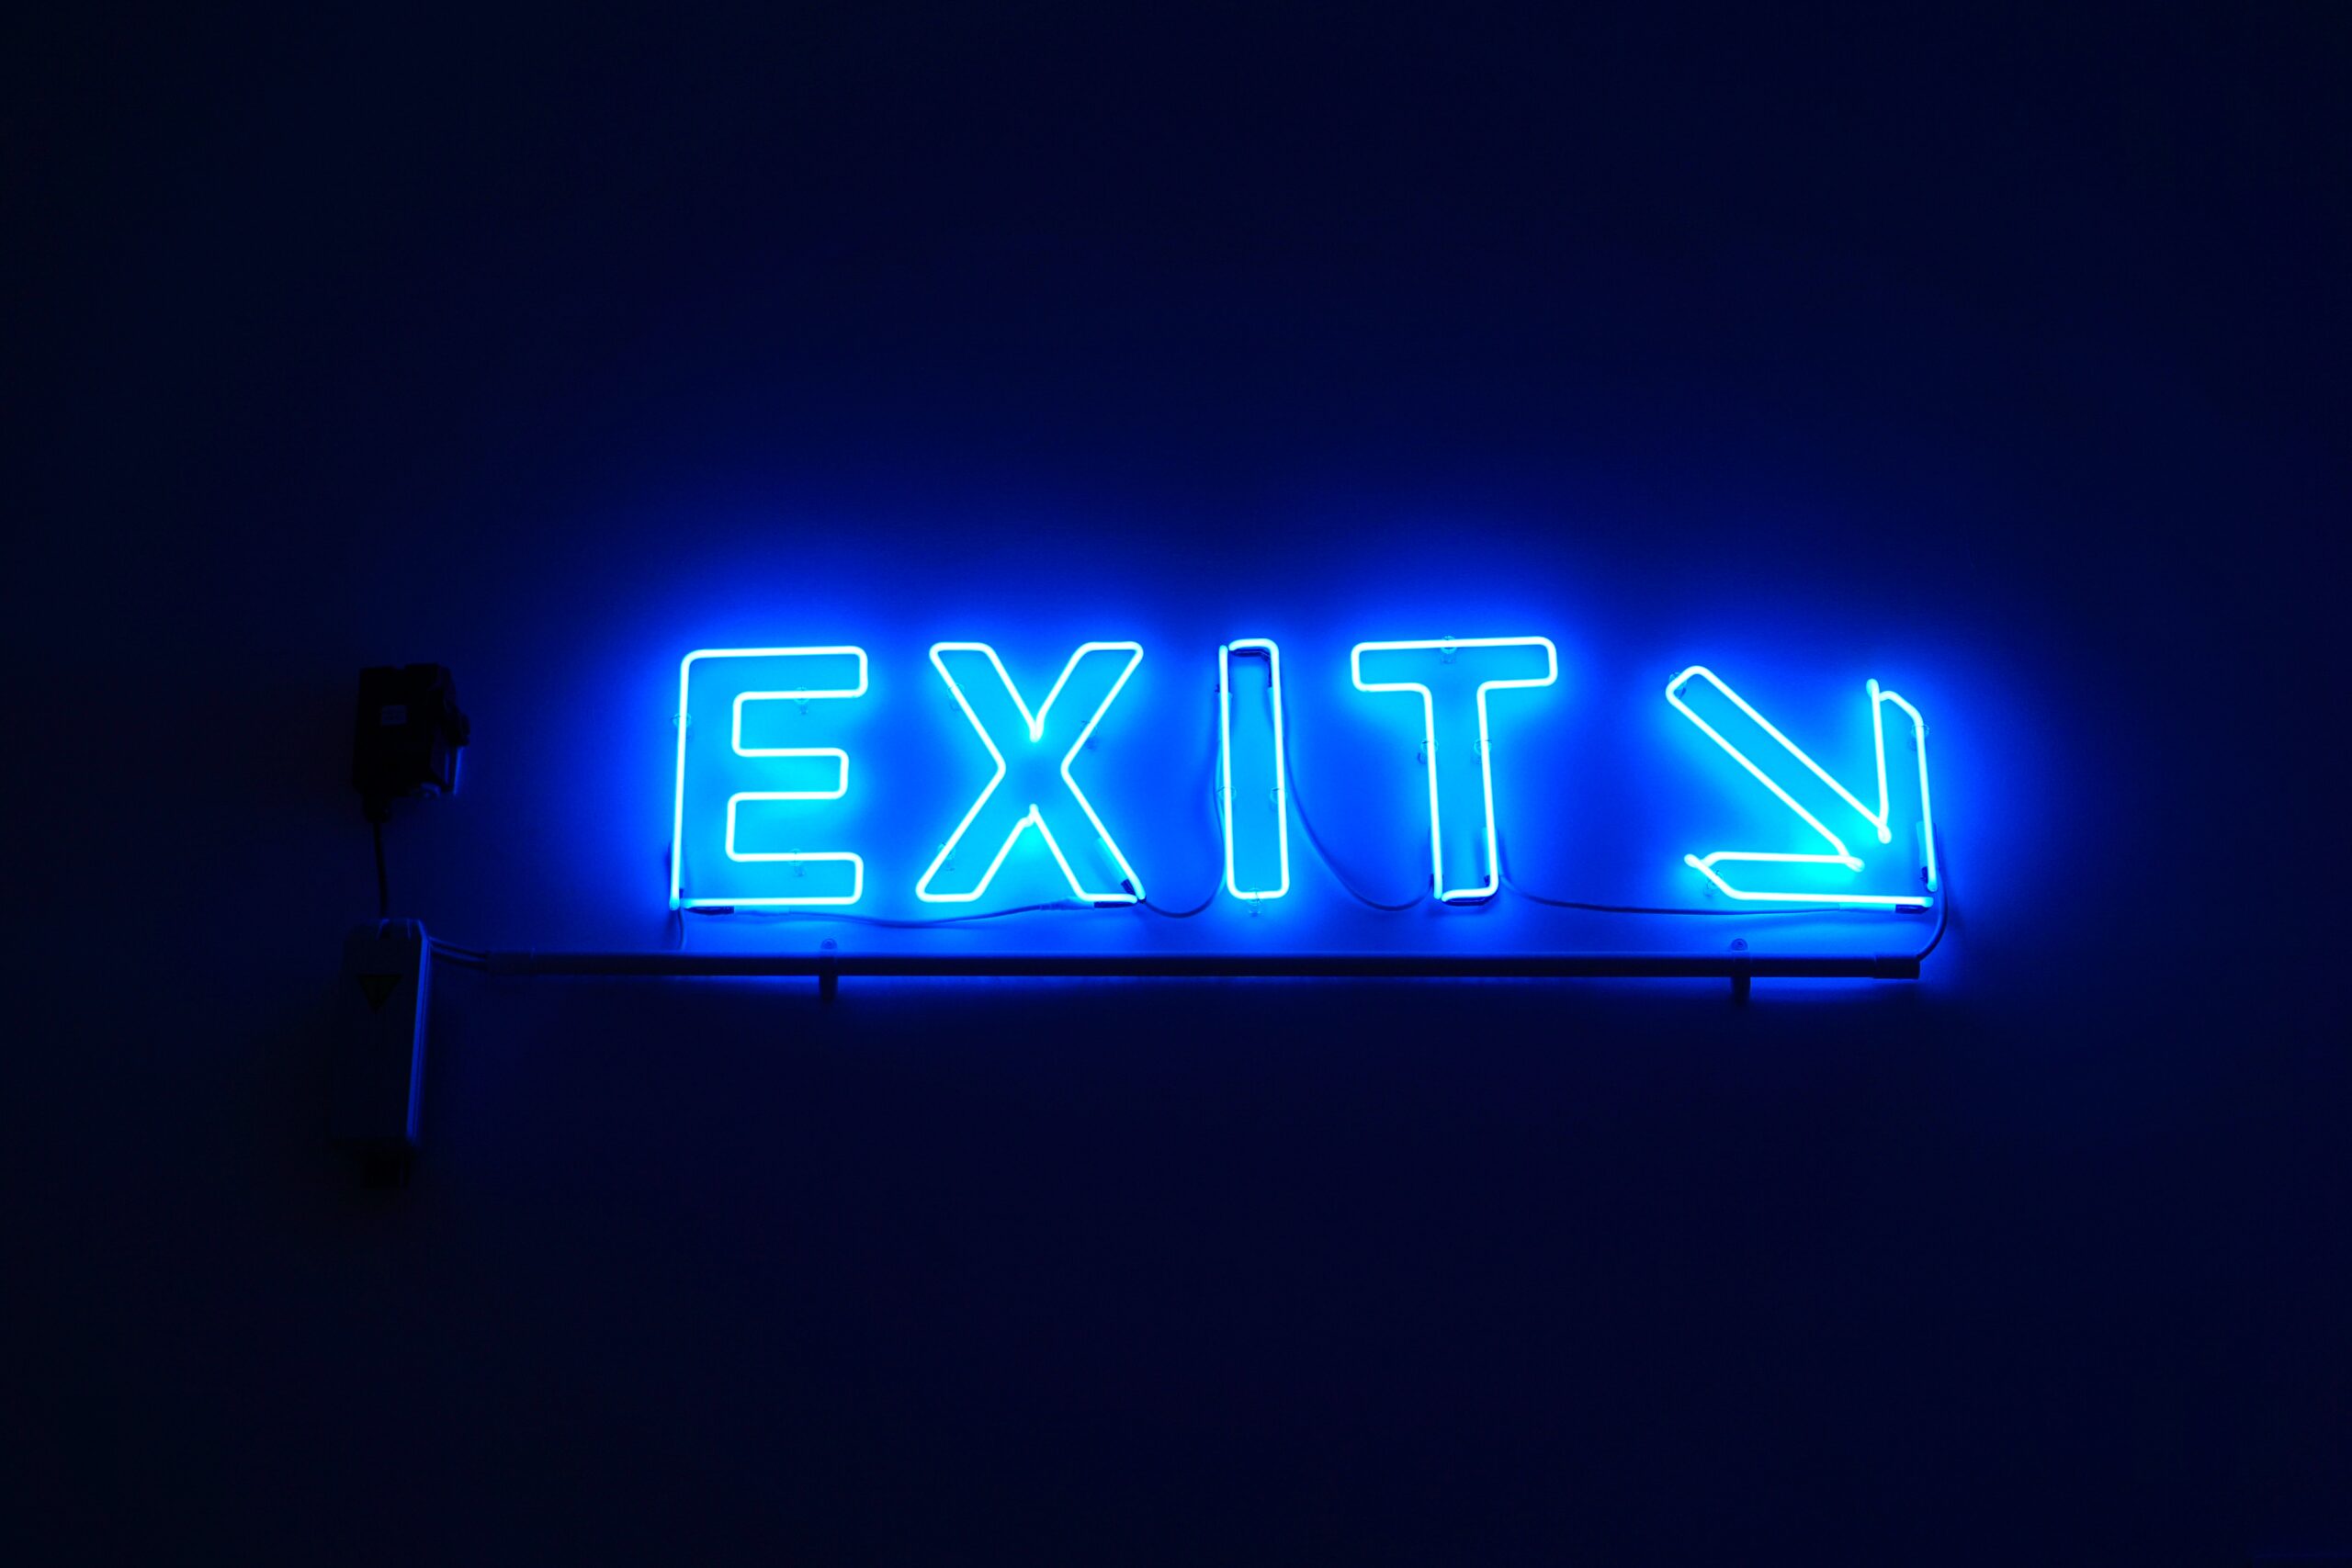 neon blue "exit" sign